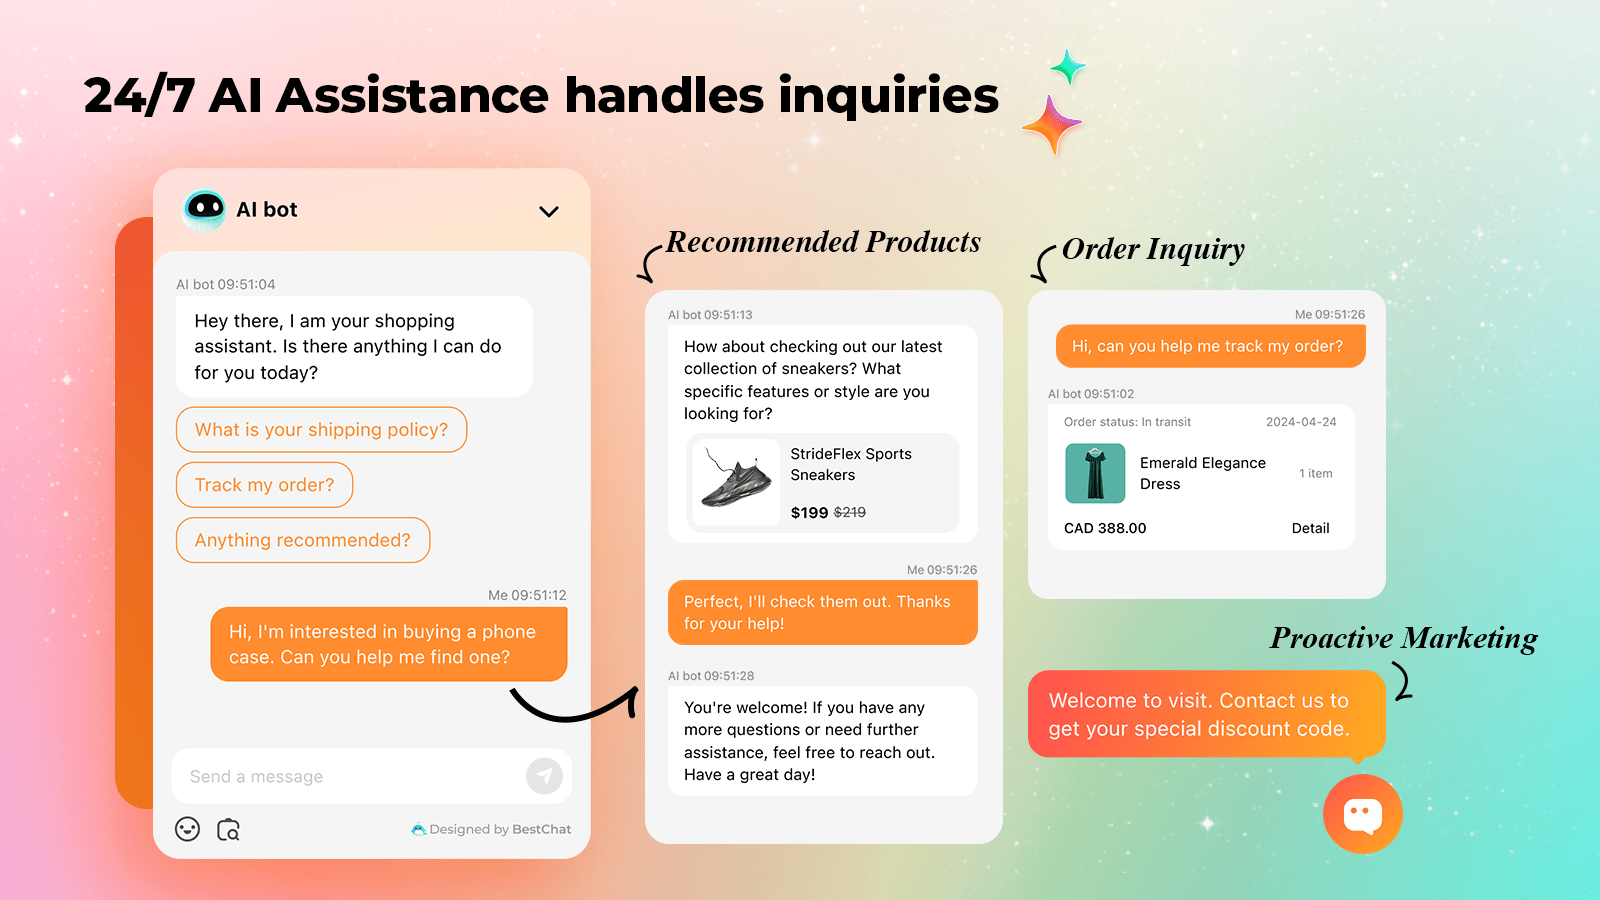 24/7 AI Assistance handles inquiries